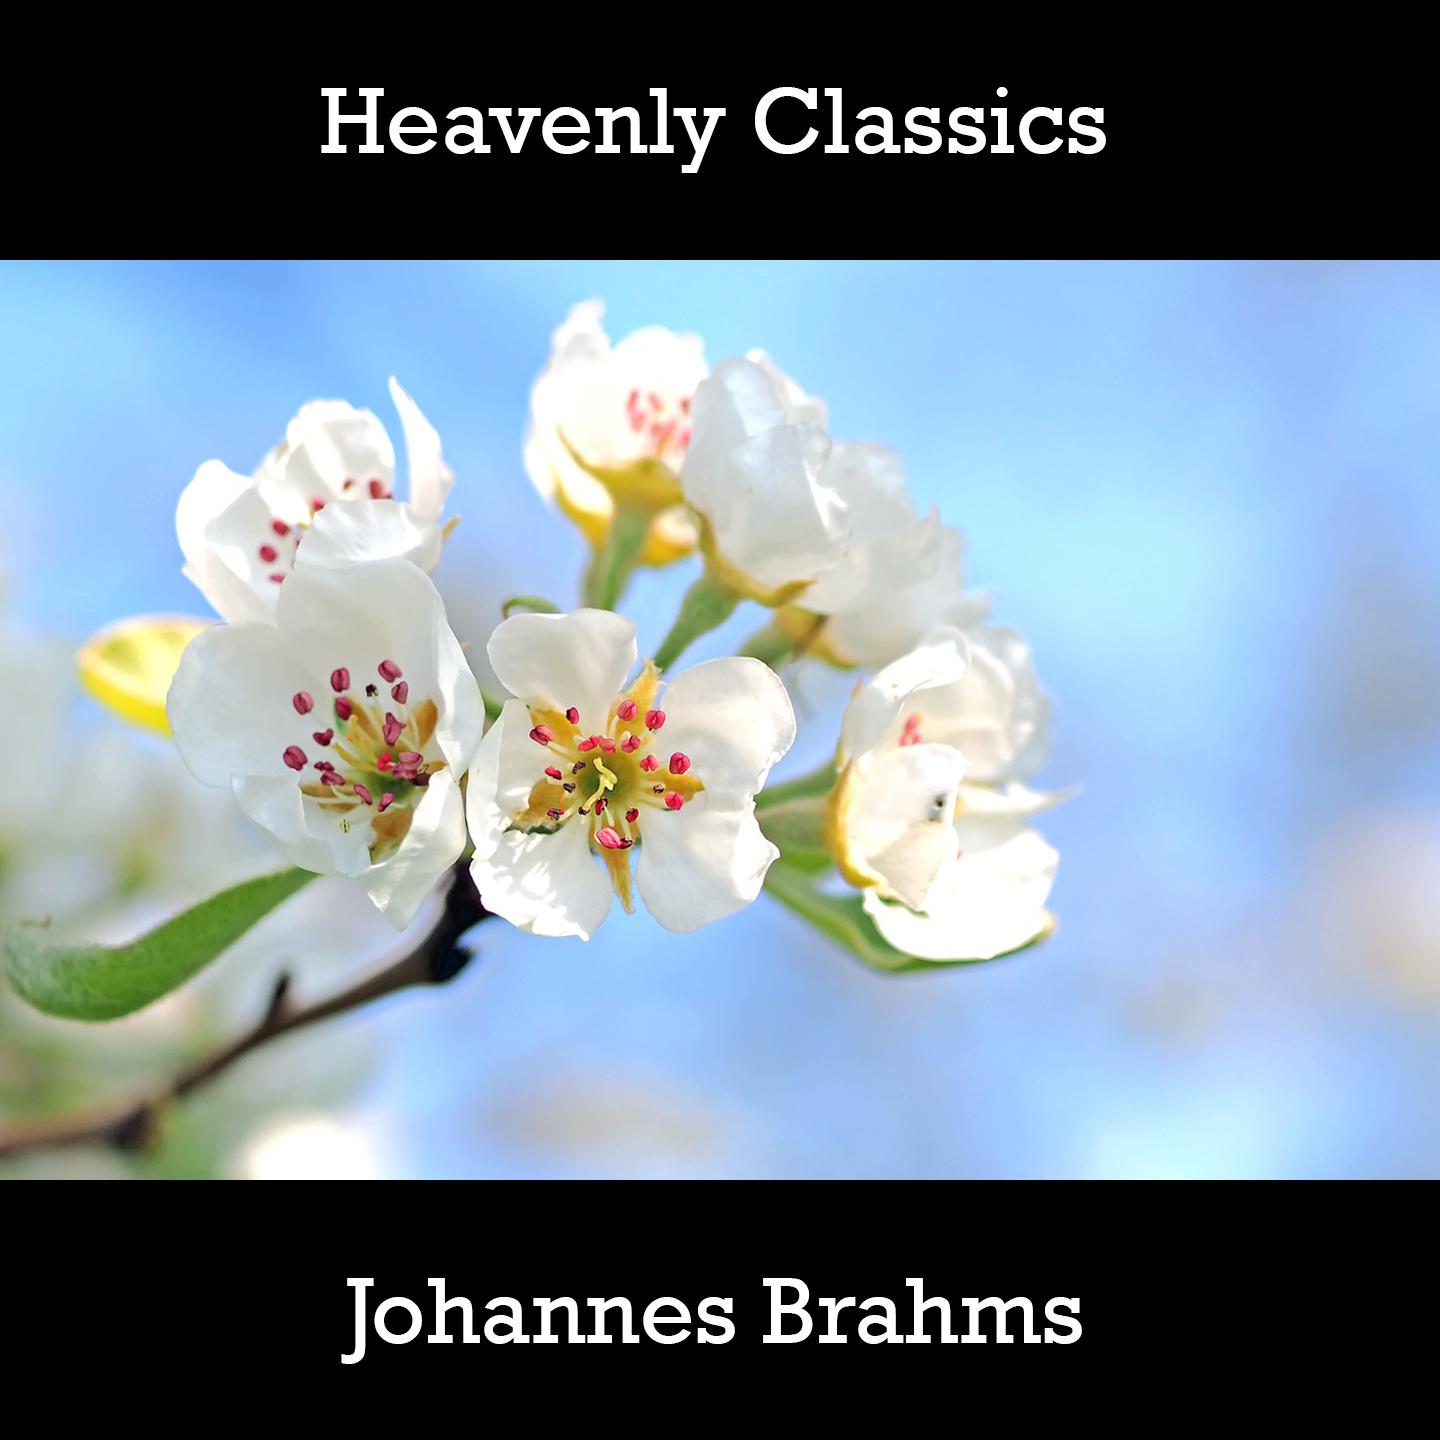 Heavenly Classics Johannes Brahms